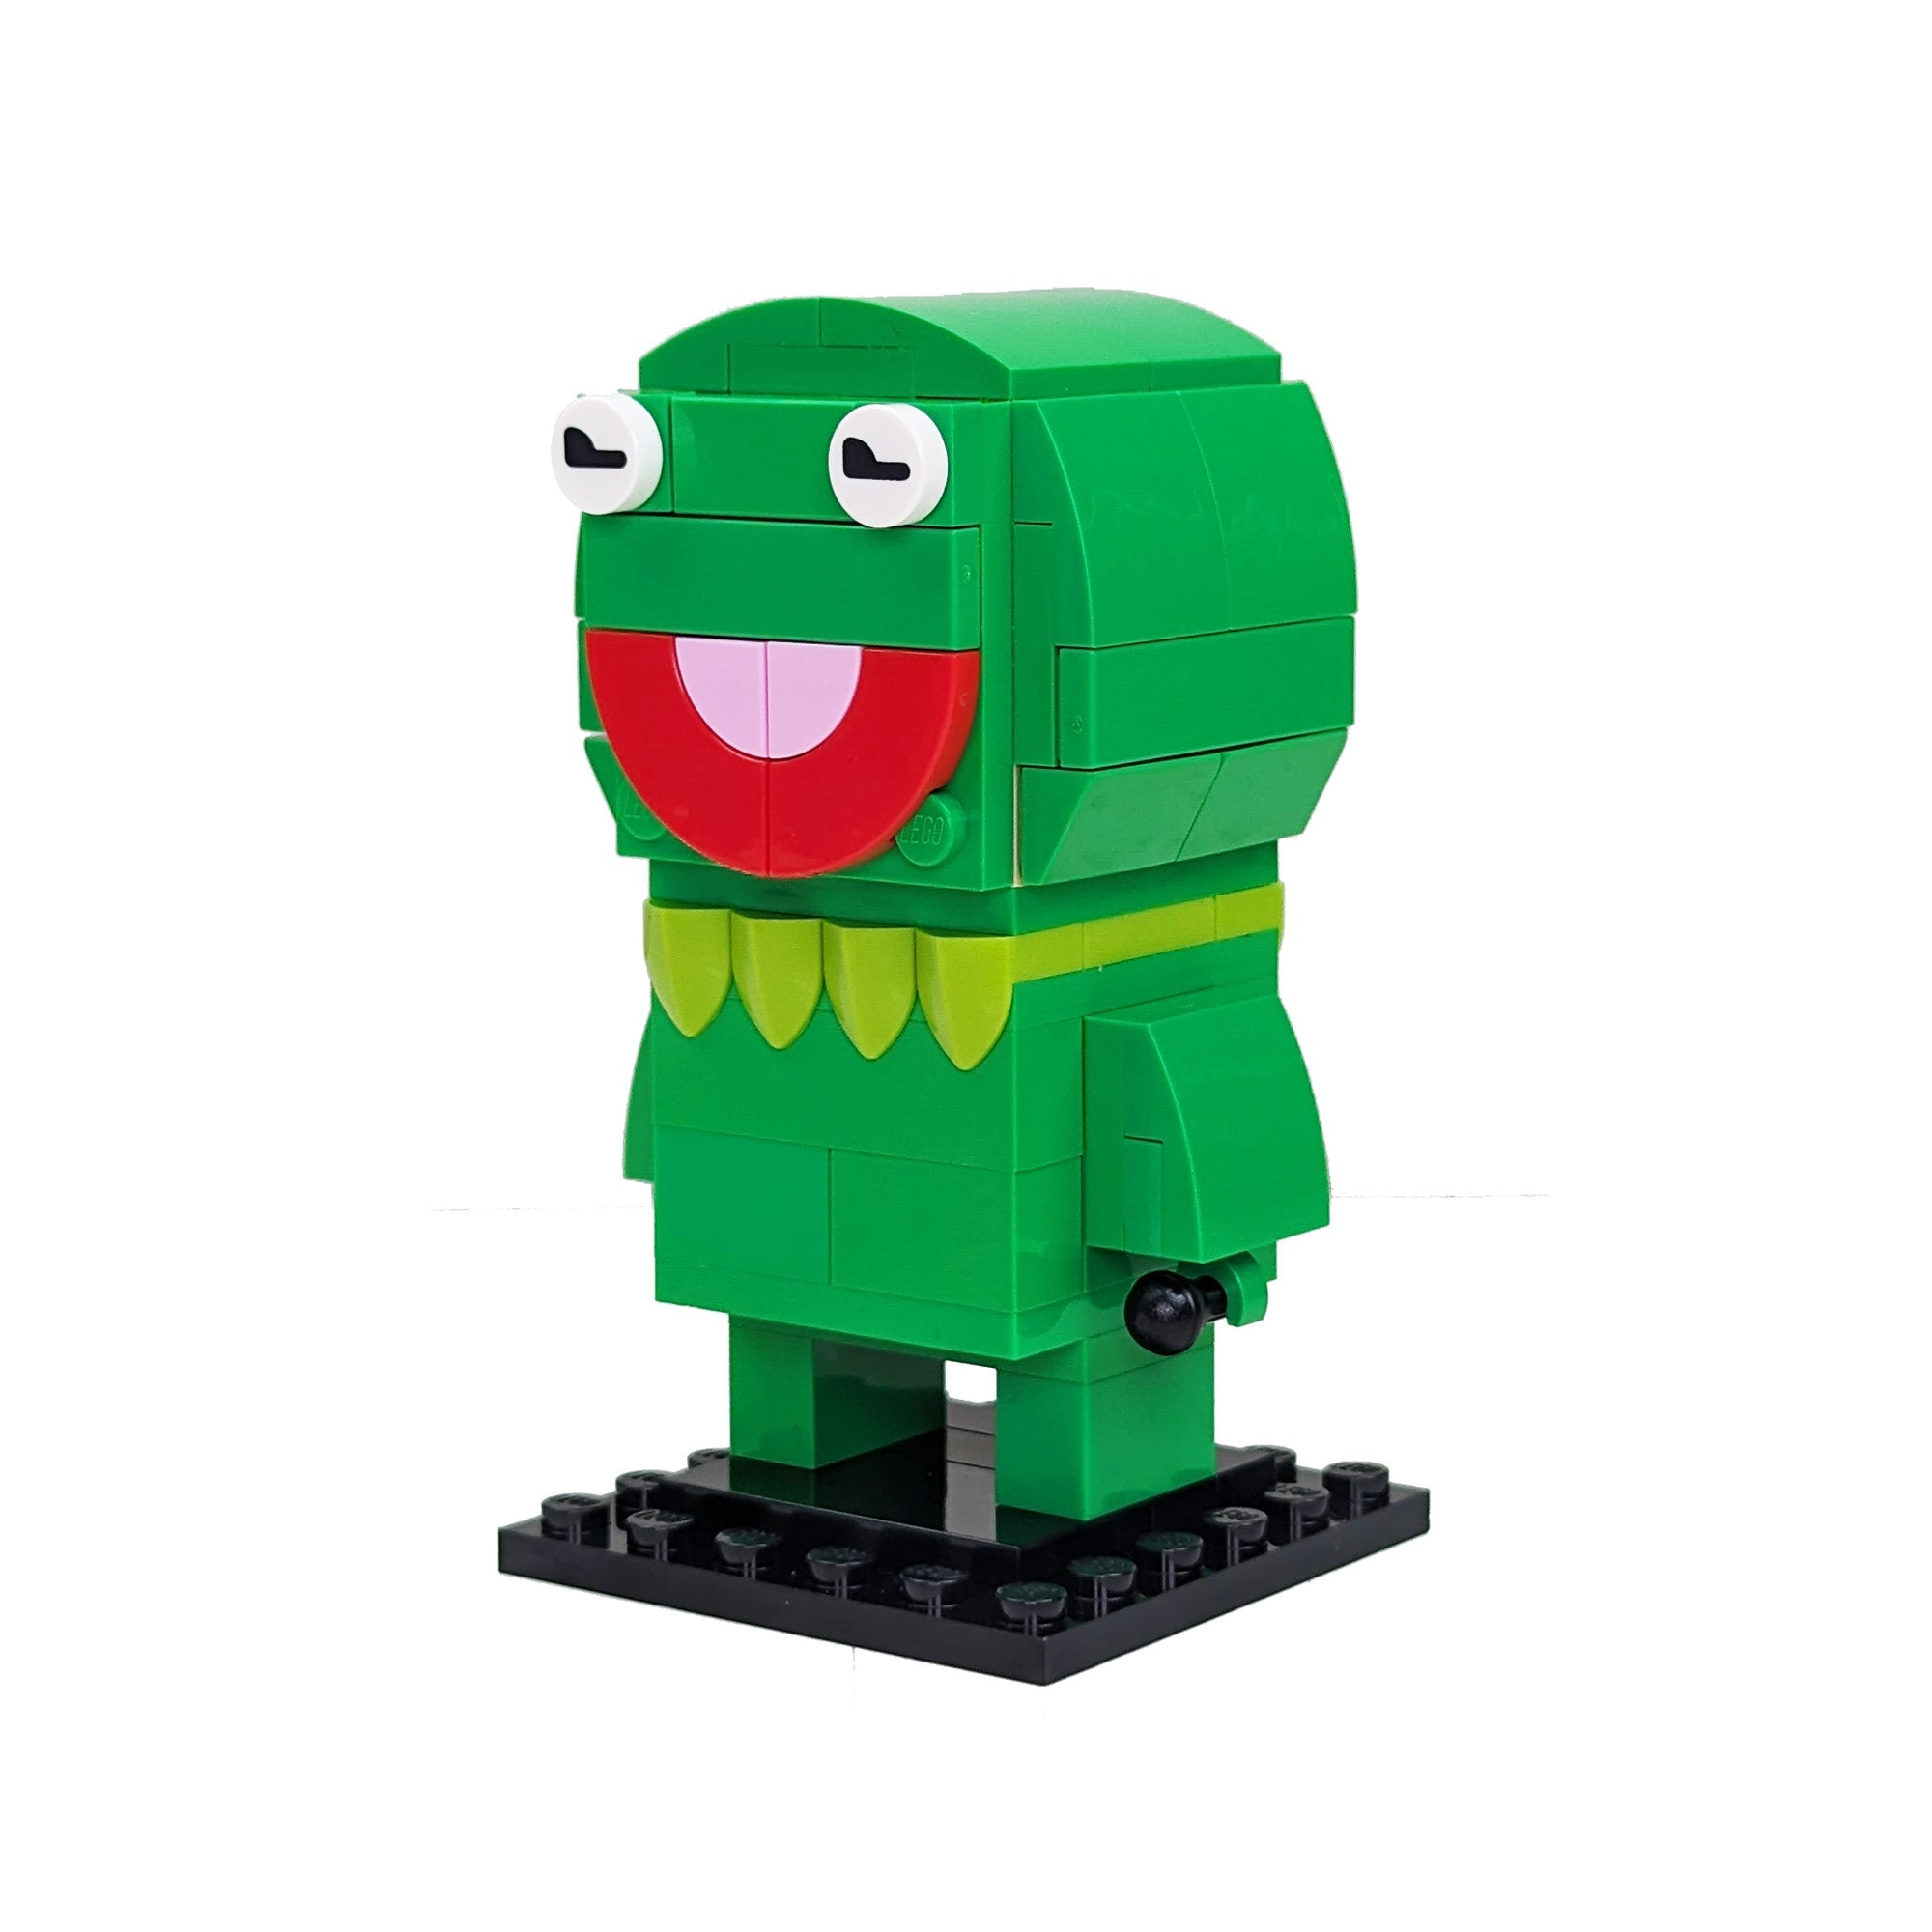 Kermit BrickHeadz made using LEGO parts